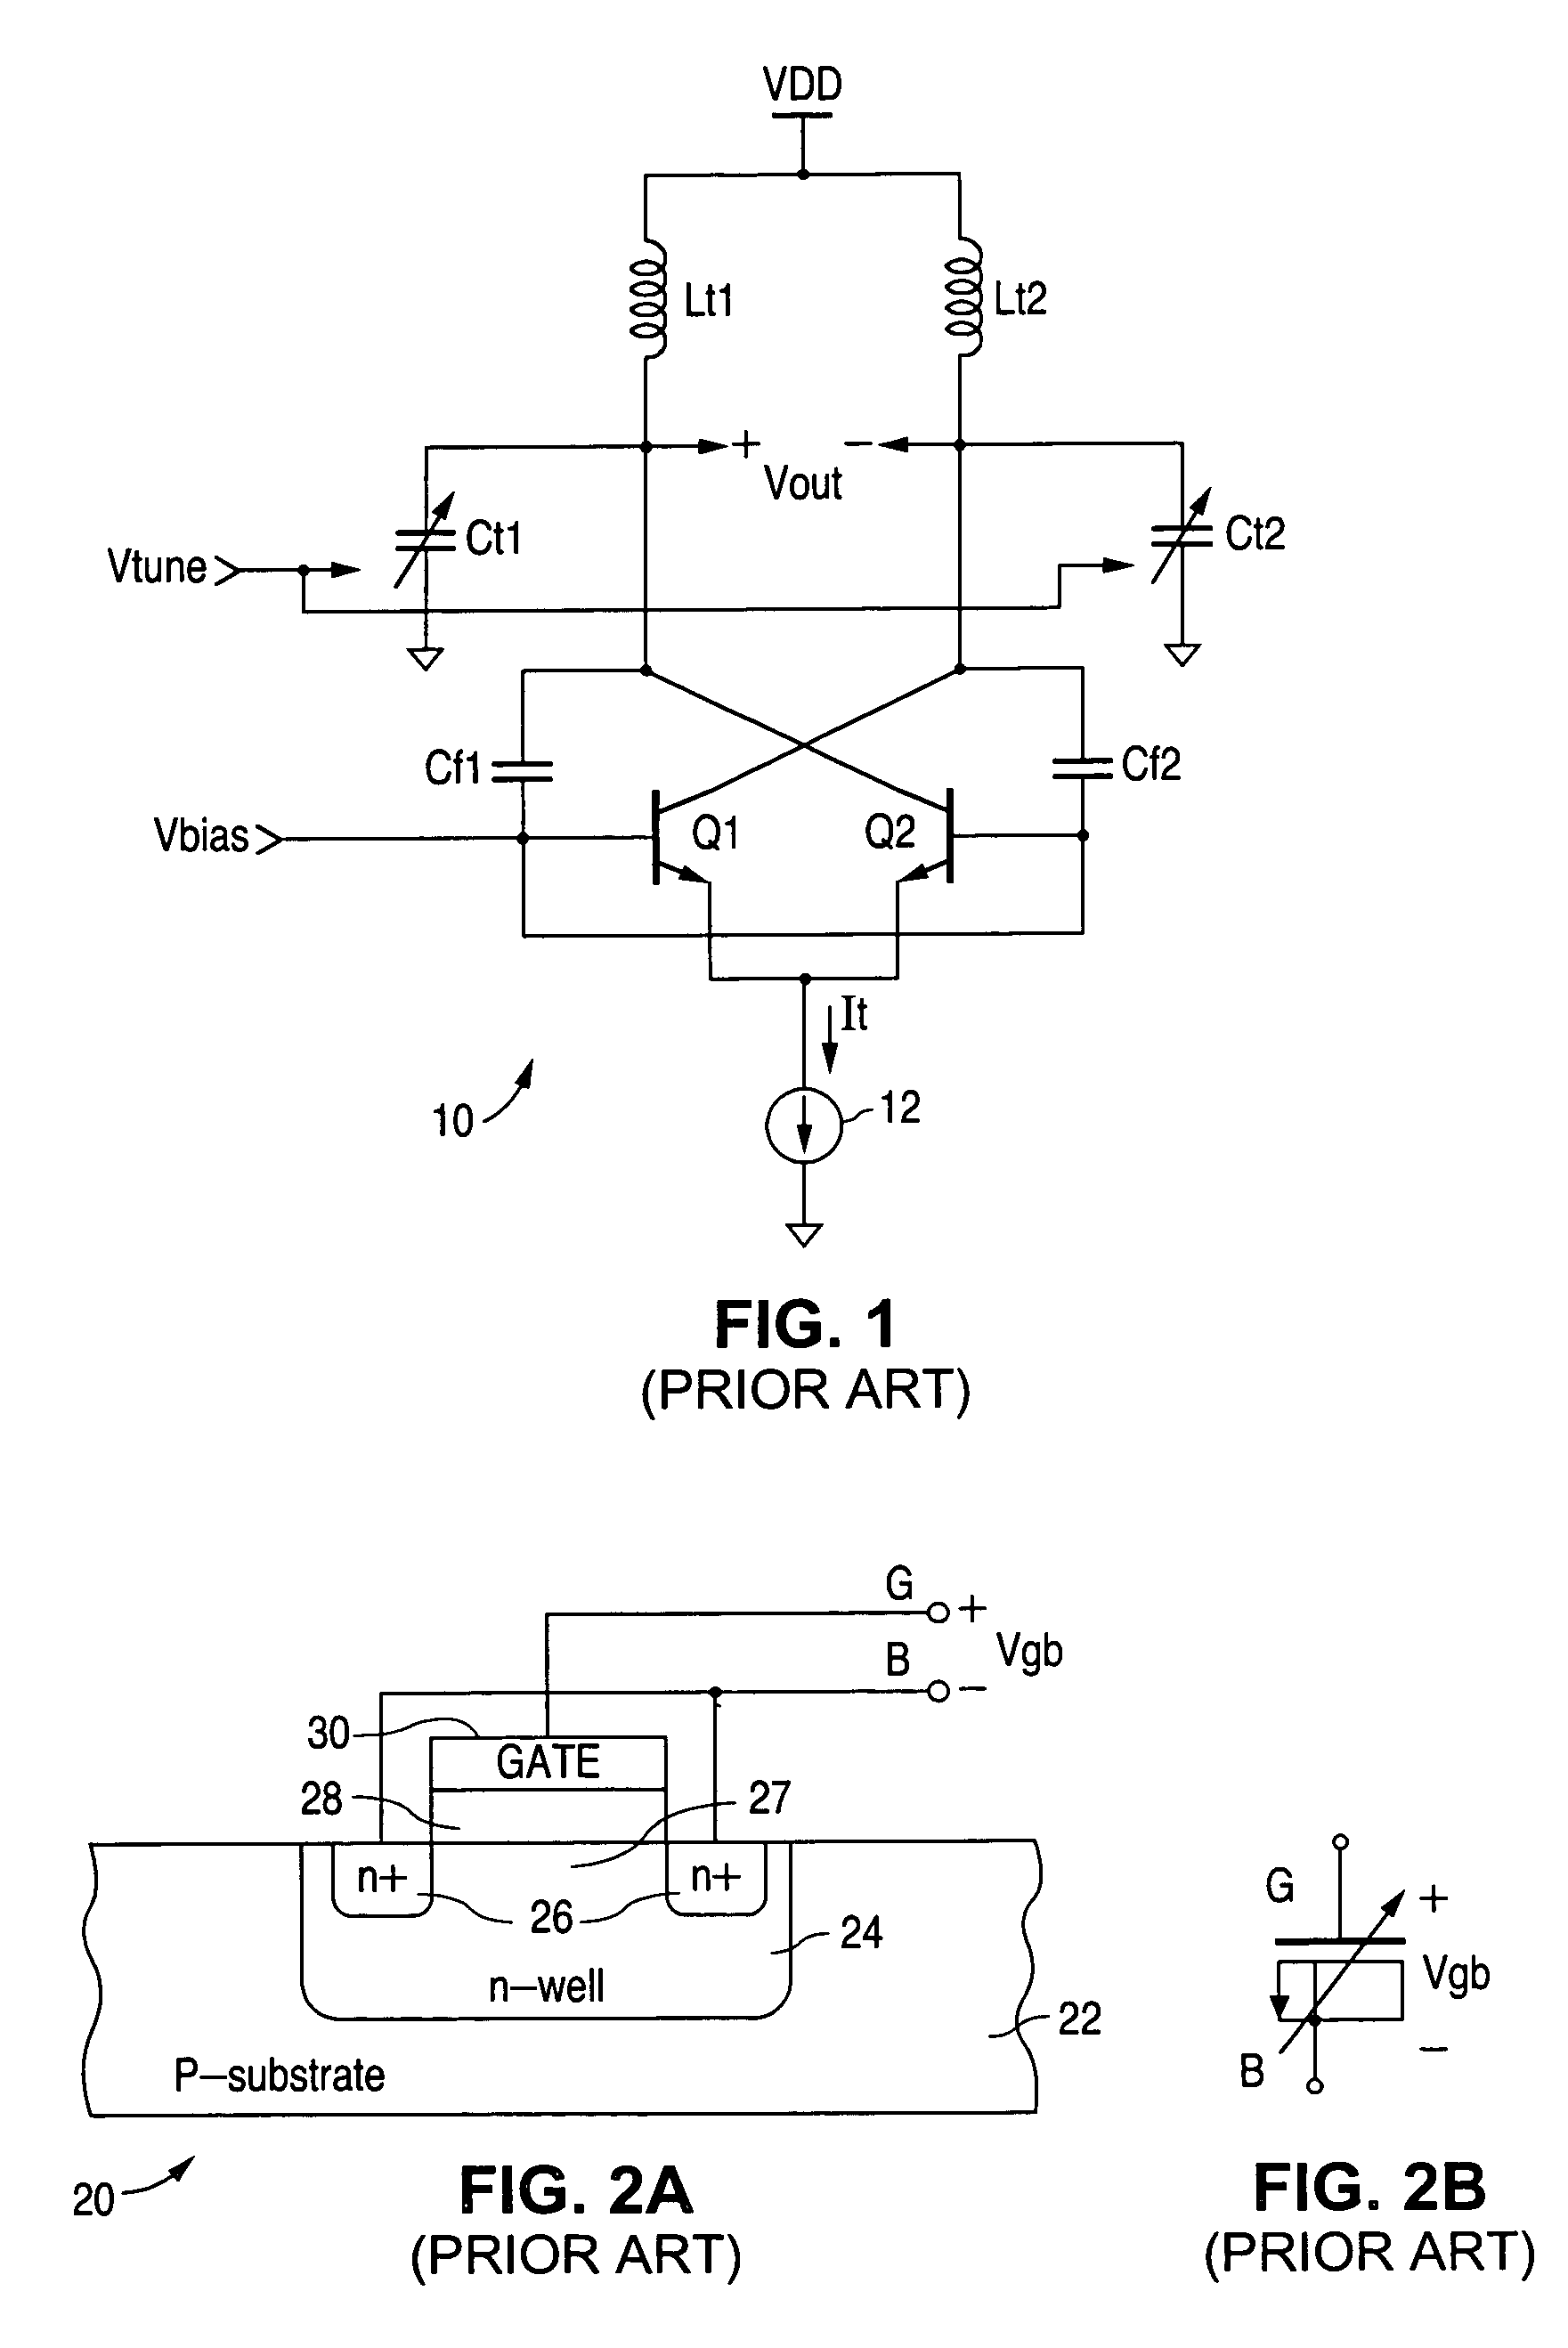 Tunable capacitance circuit for voltage control oscillator